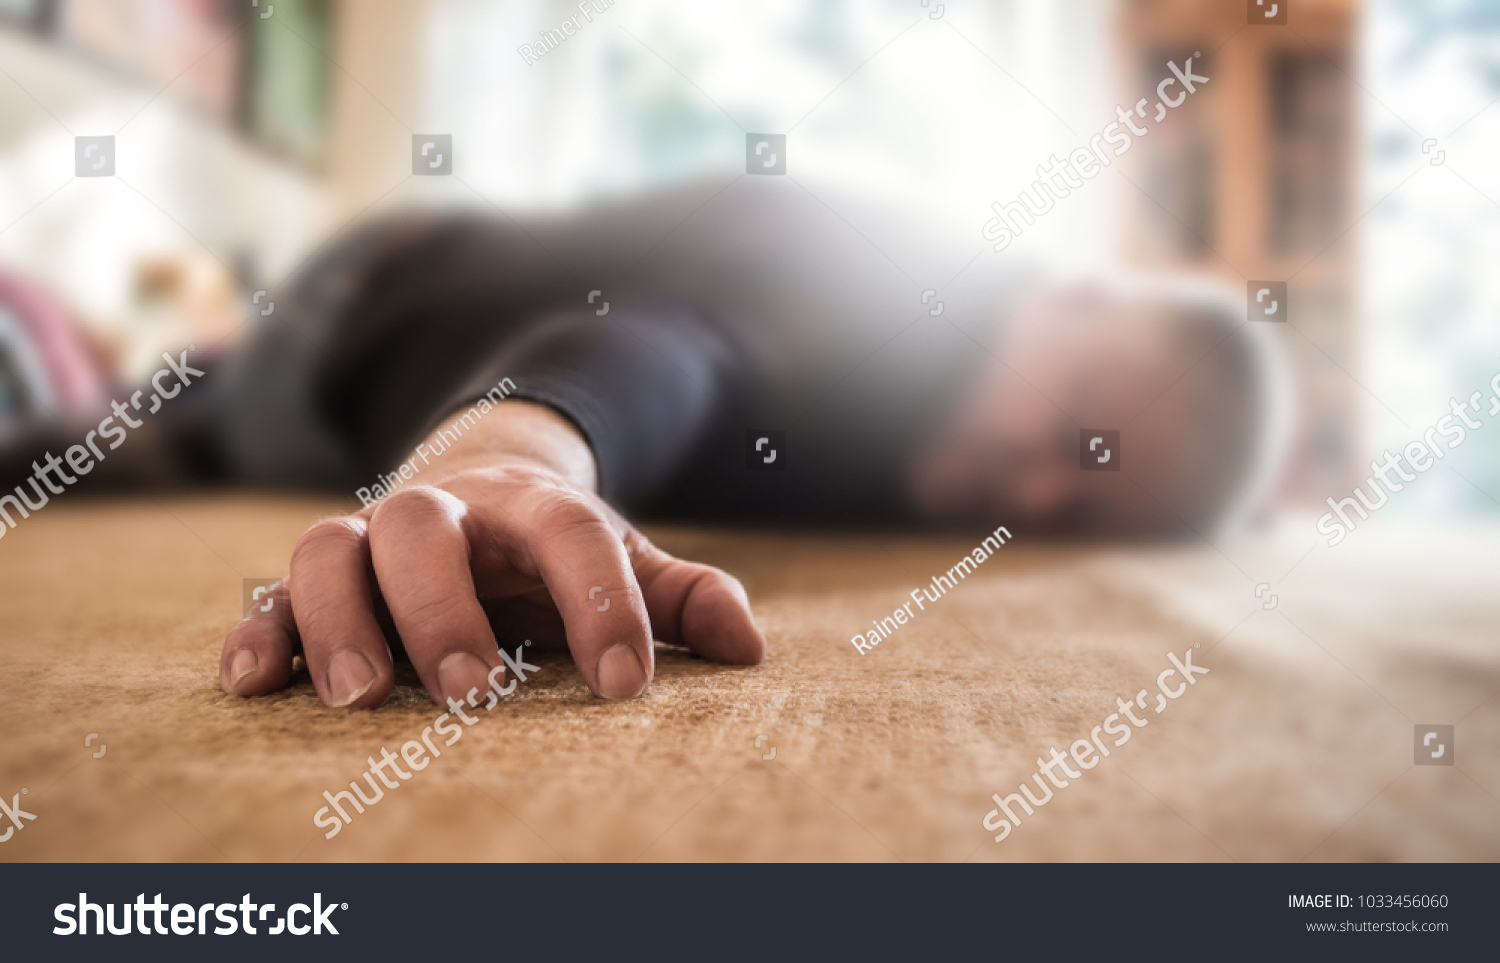 a man lies unconscious in his apartment #1033456060